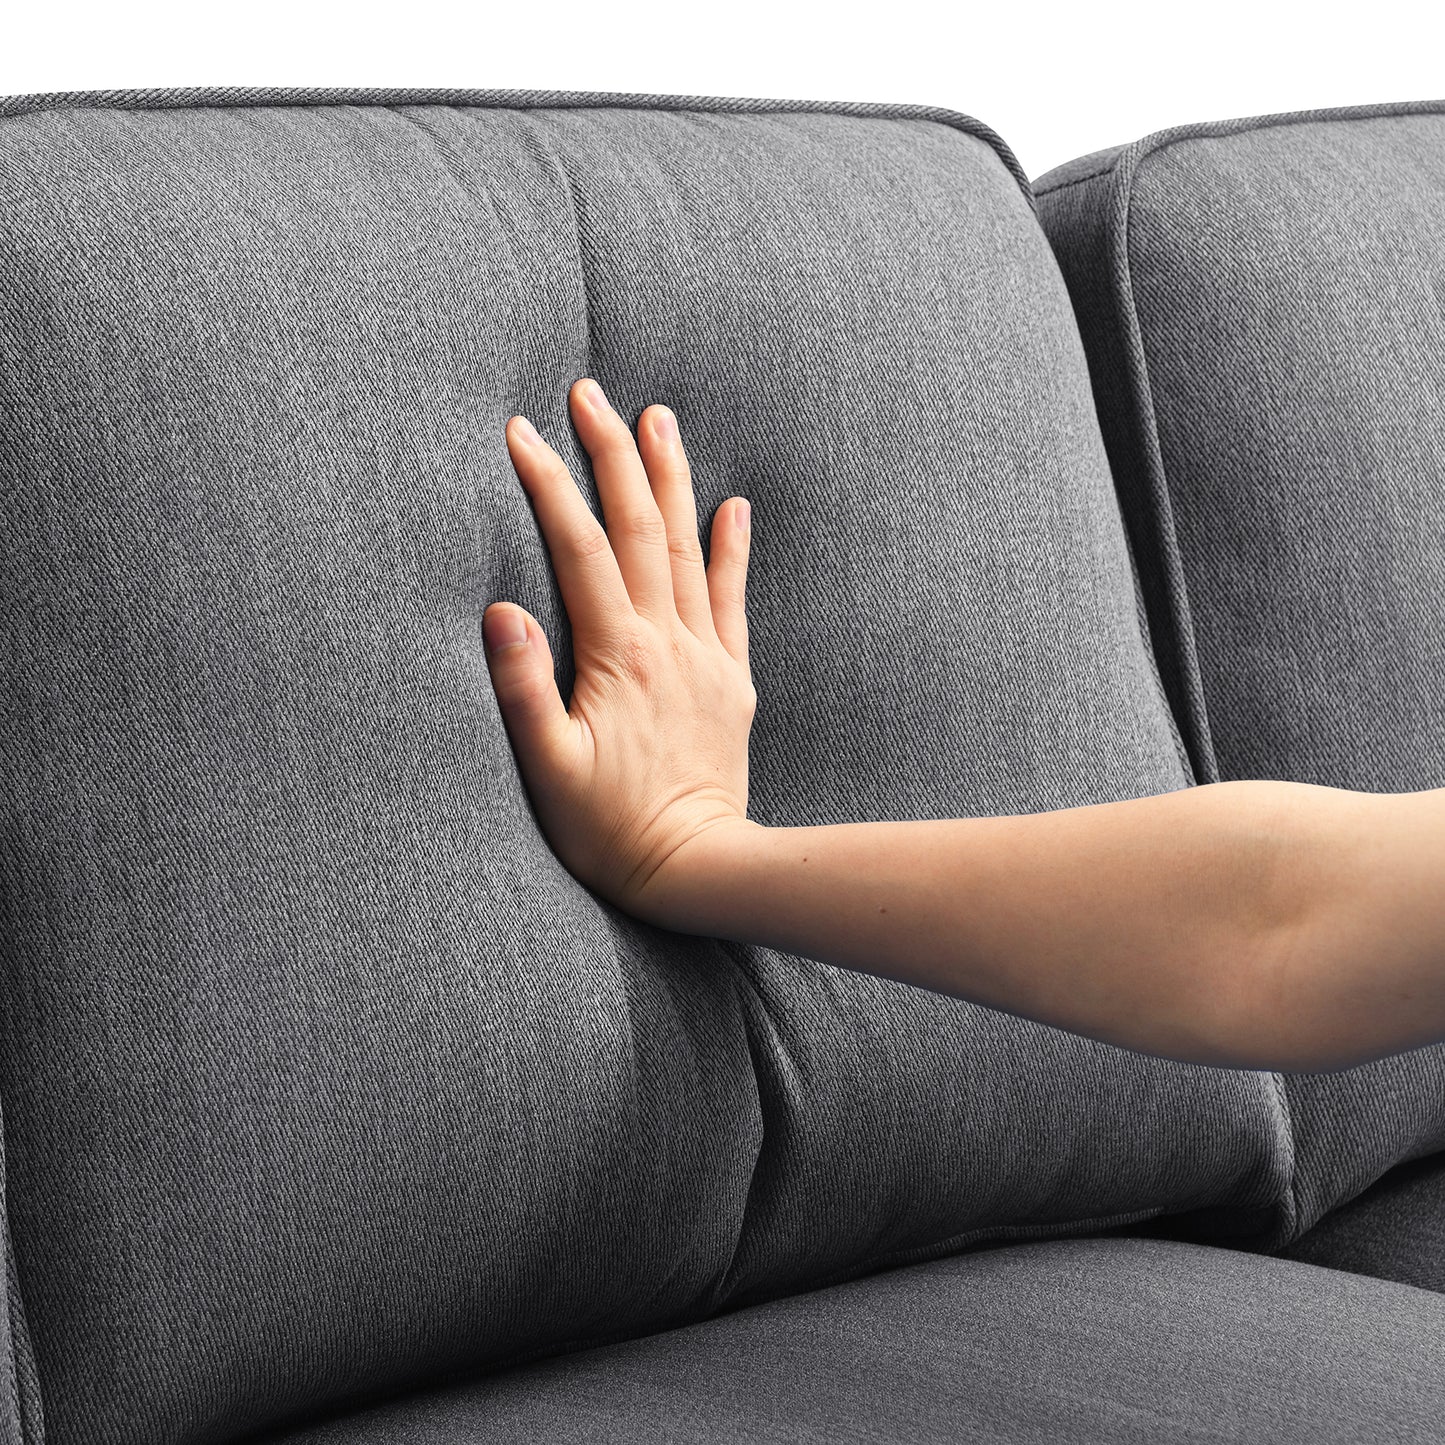 Presto L-shaped Sectional Sofa - Grey